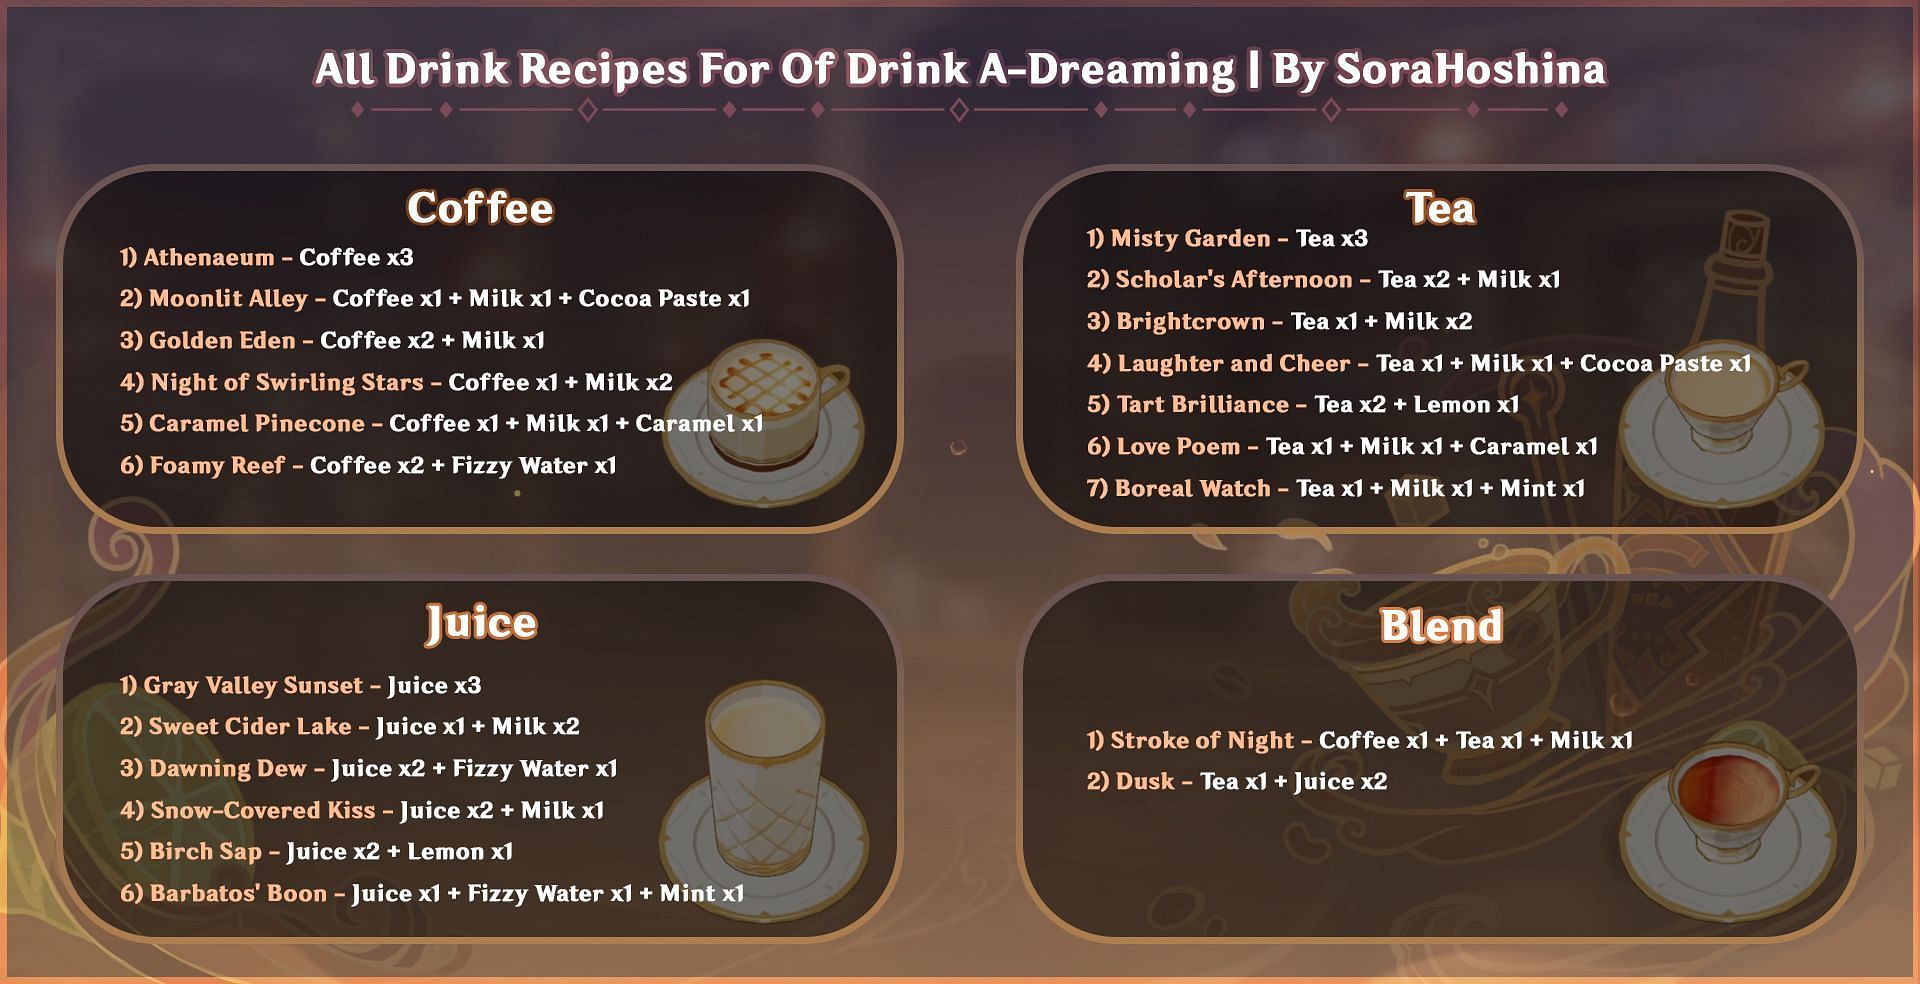 All Drink Recipes Infographic (Image via HoYoLAB/SoraHoshina)